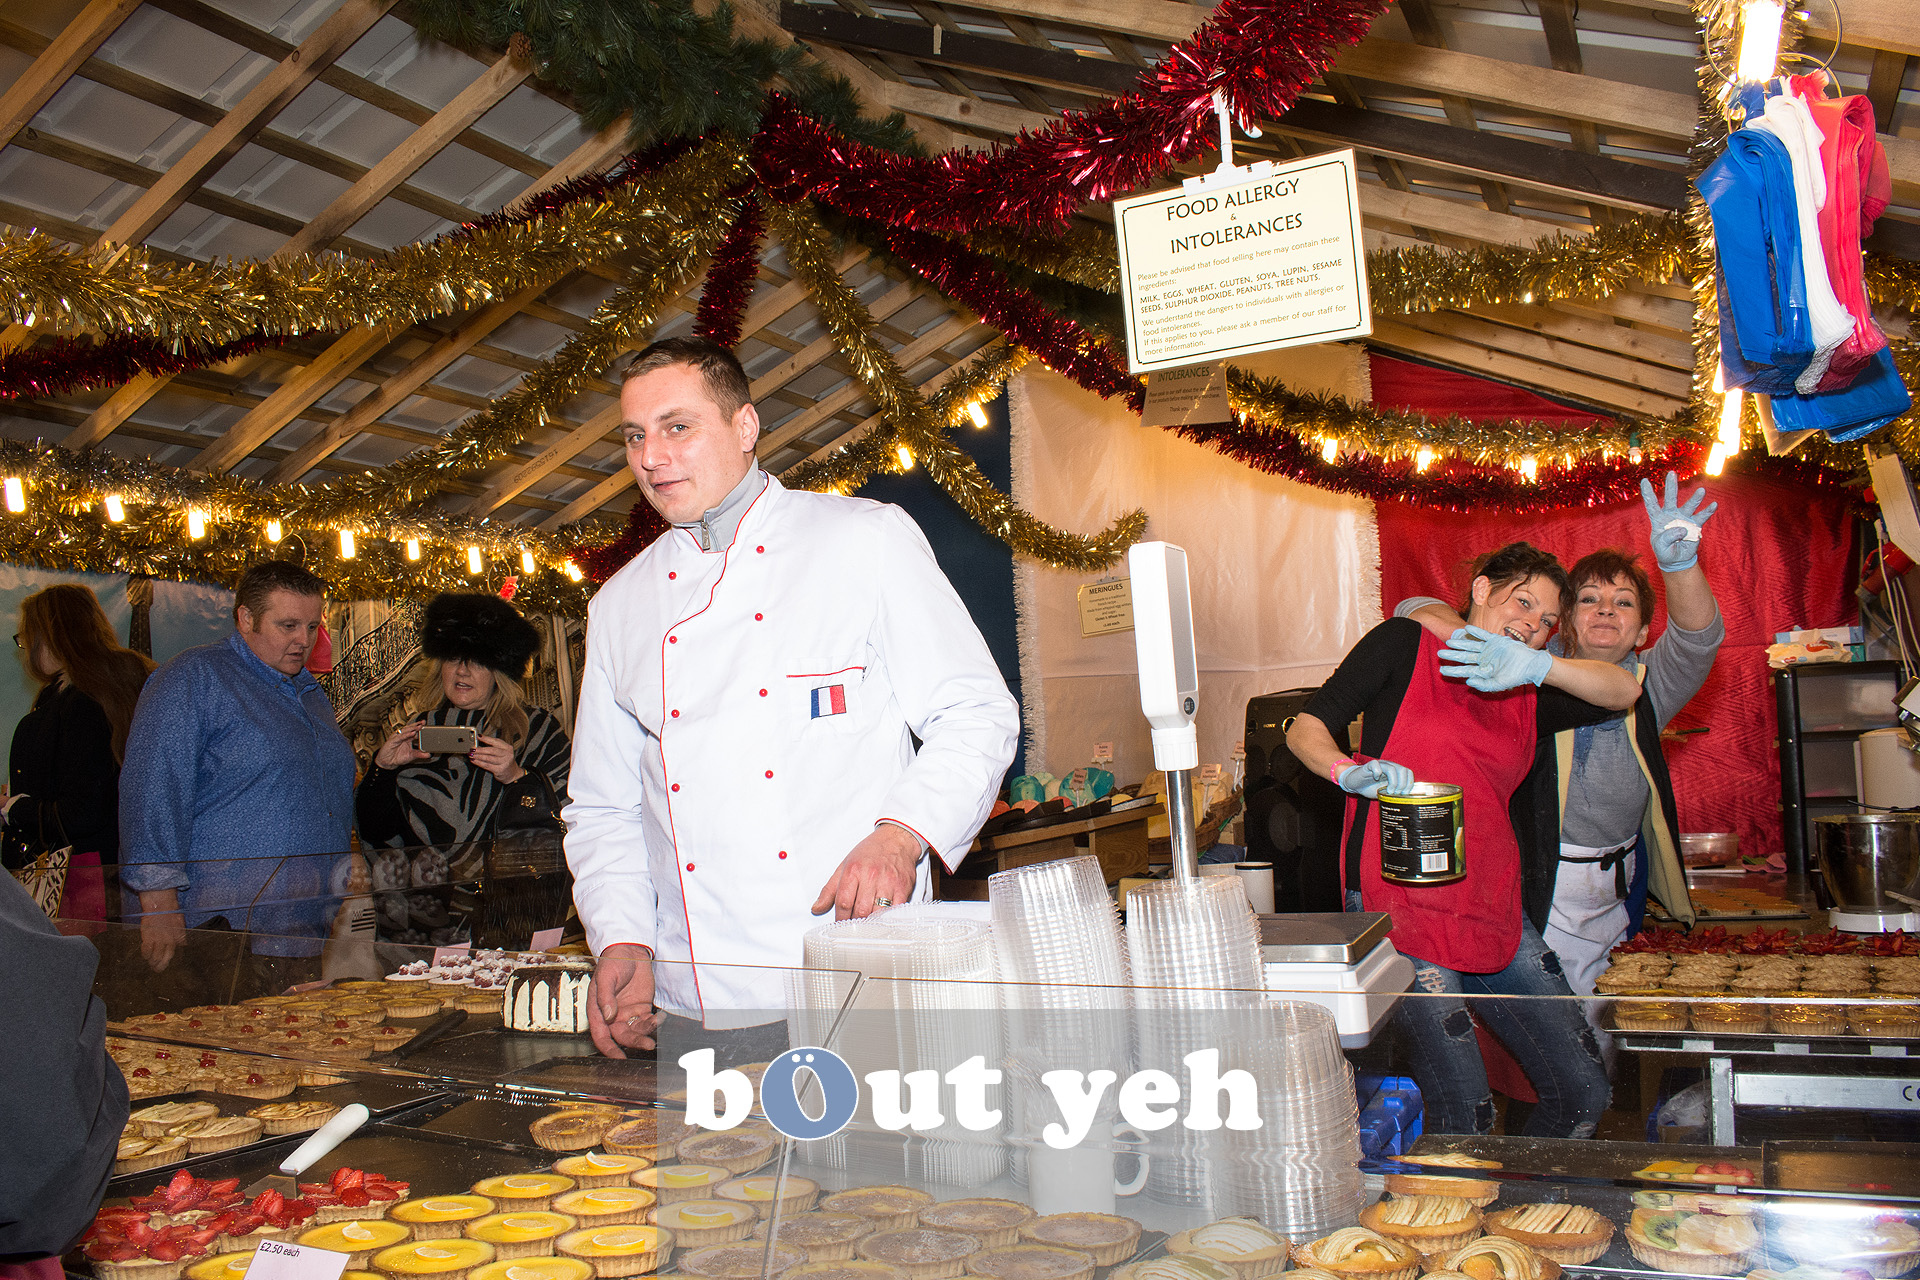 Workers at Belfast Christmas Market enjoying their work. Photo 3286.